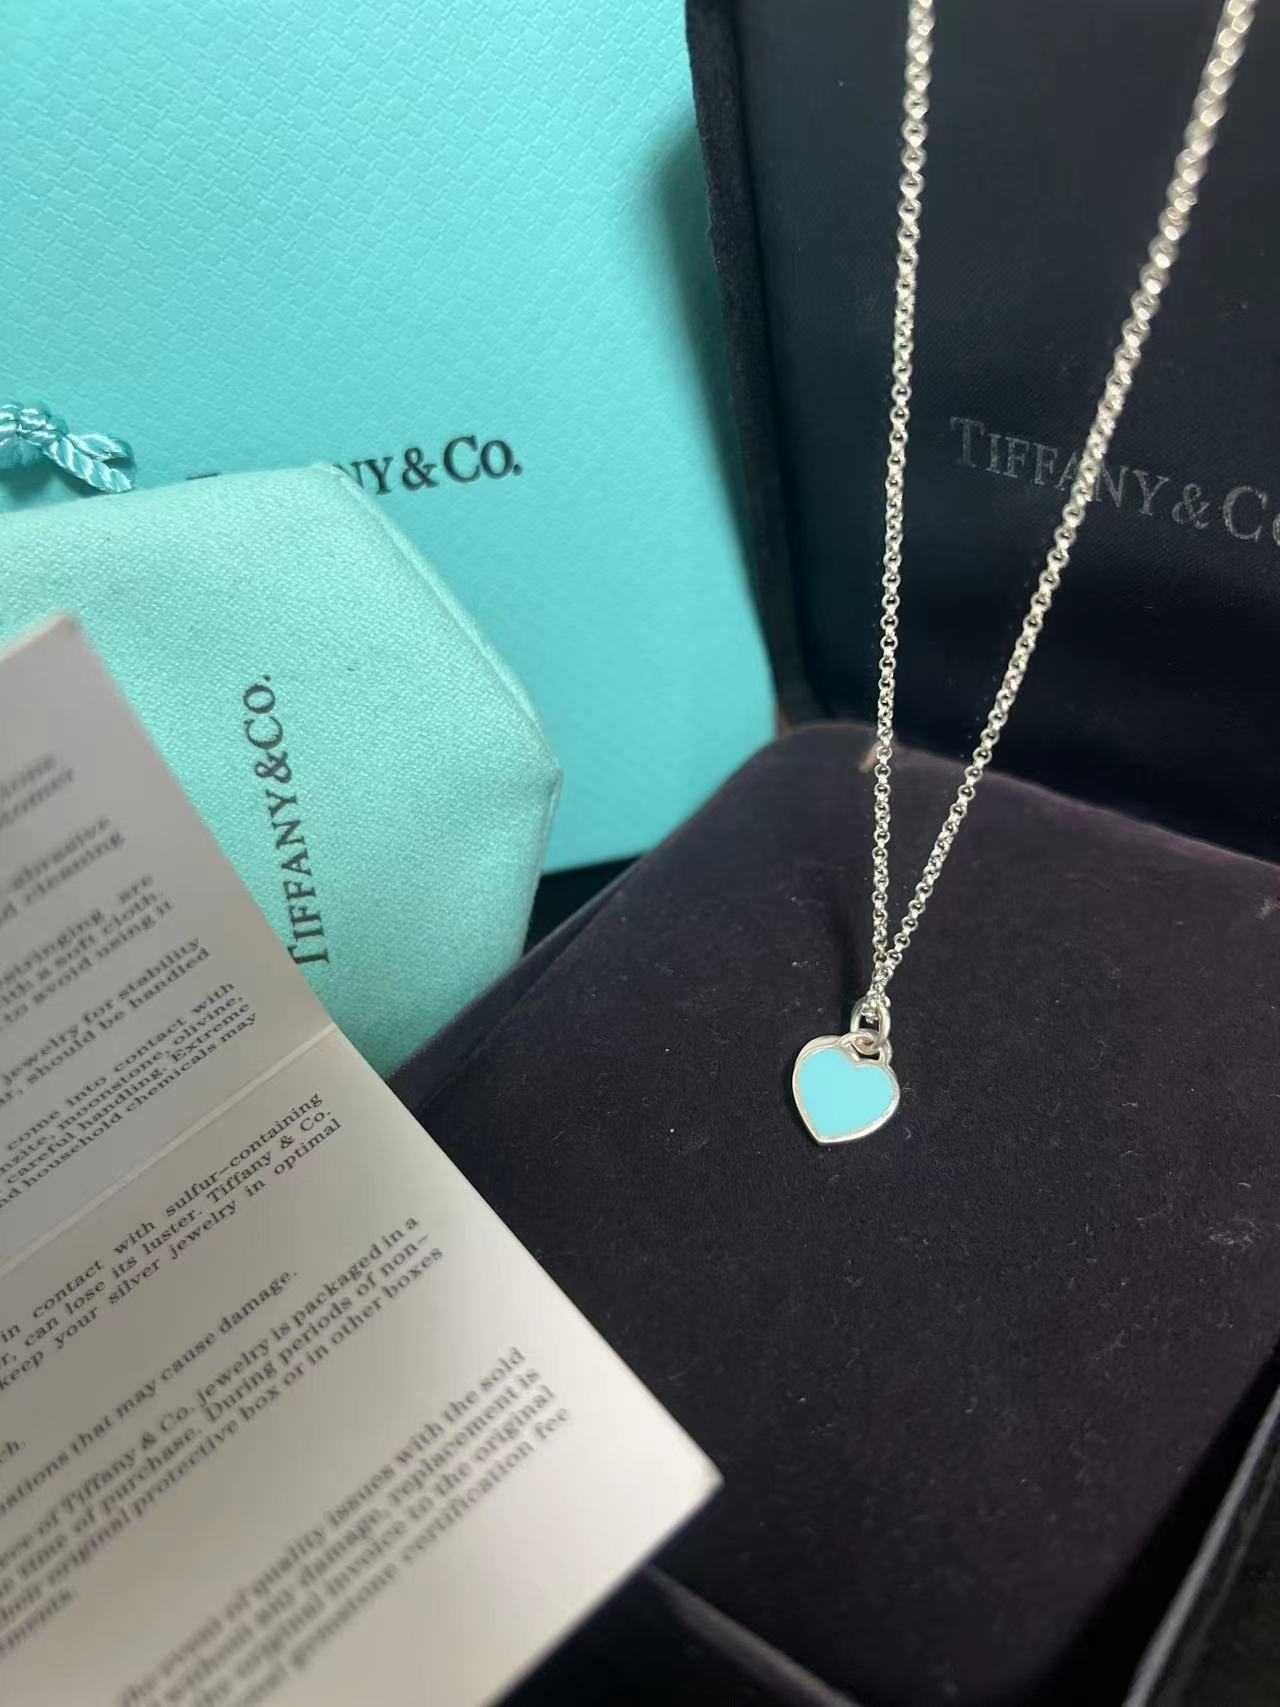 Tiffany&Co necklace